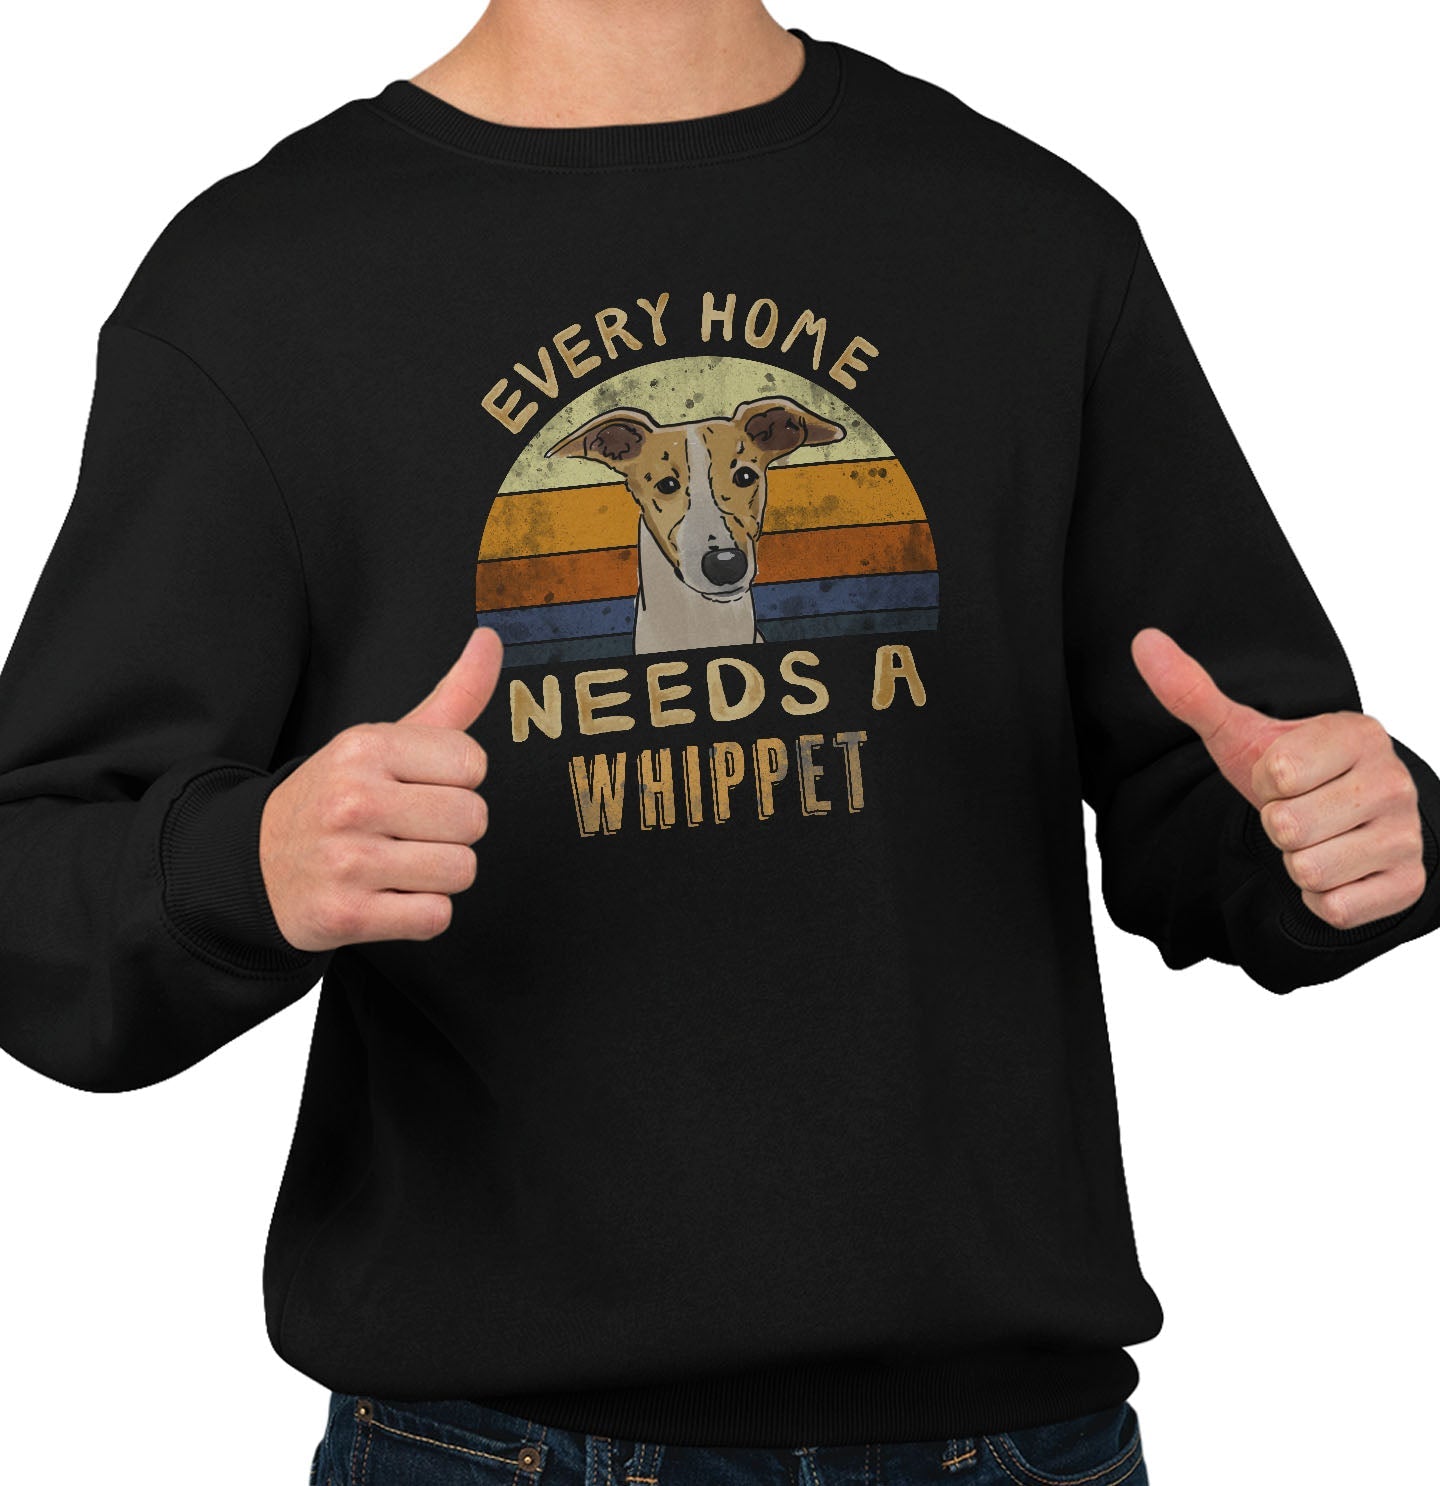 Every Home Needs a Whippet - Adult Unisex Crewneck Sweatshirt